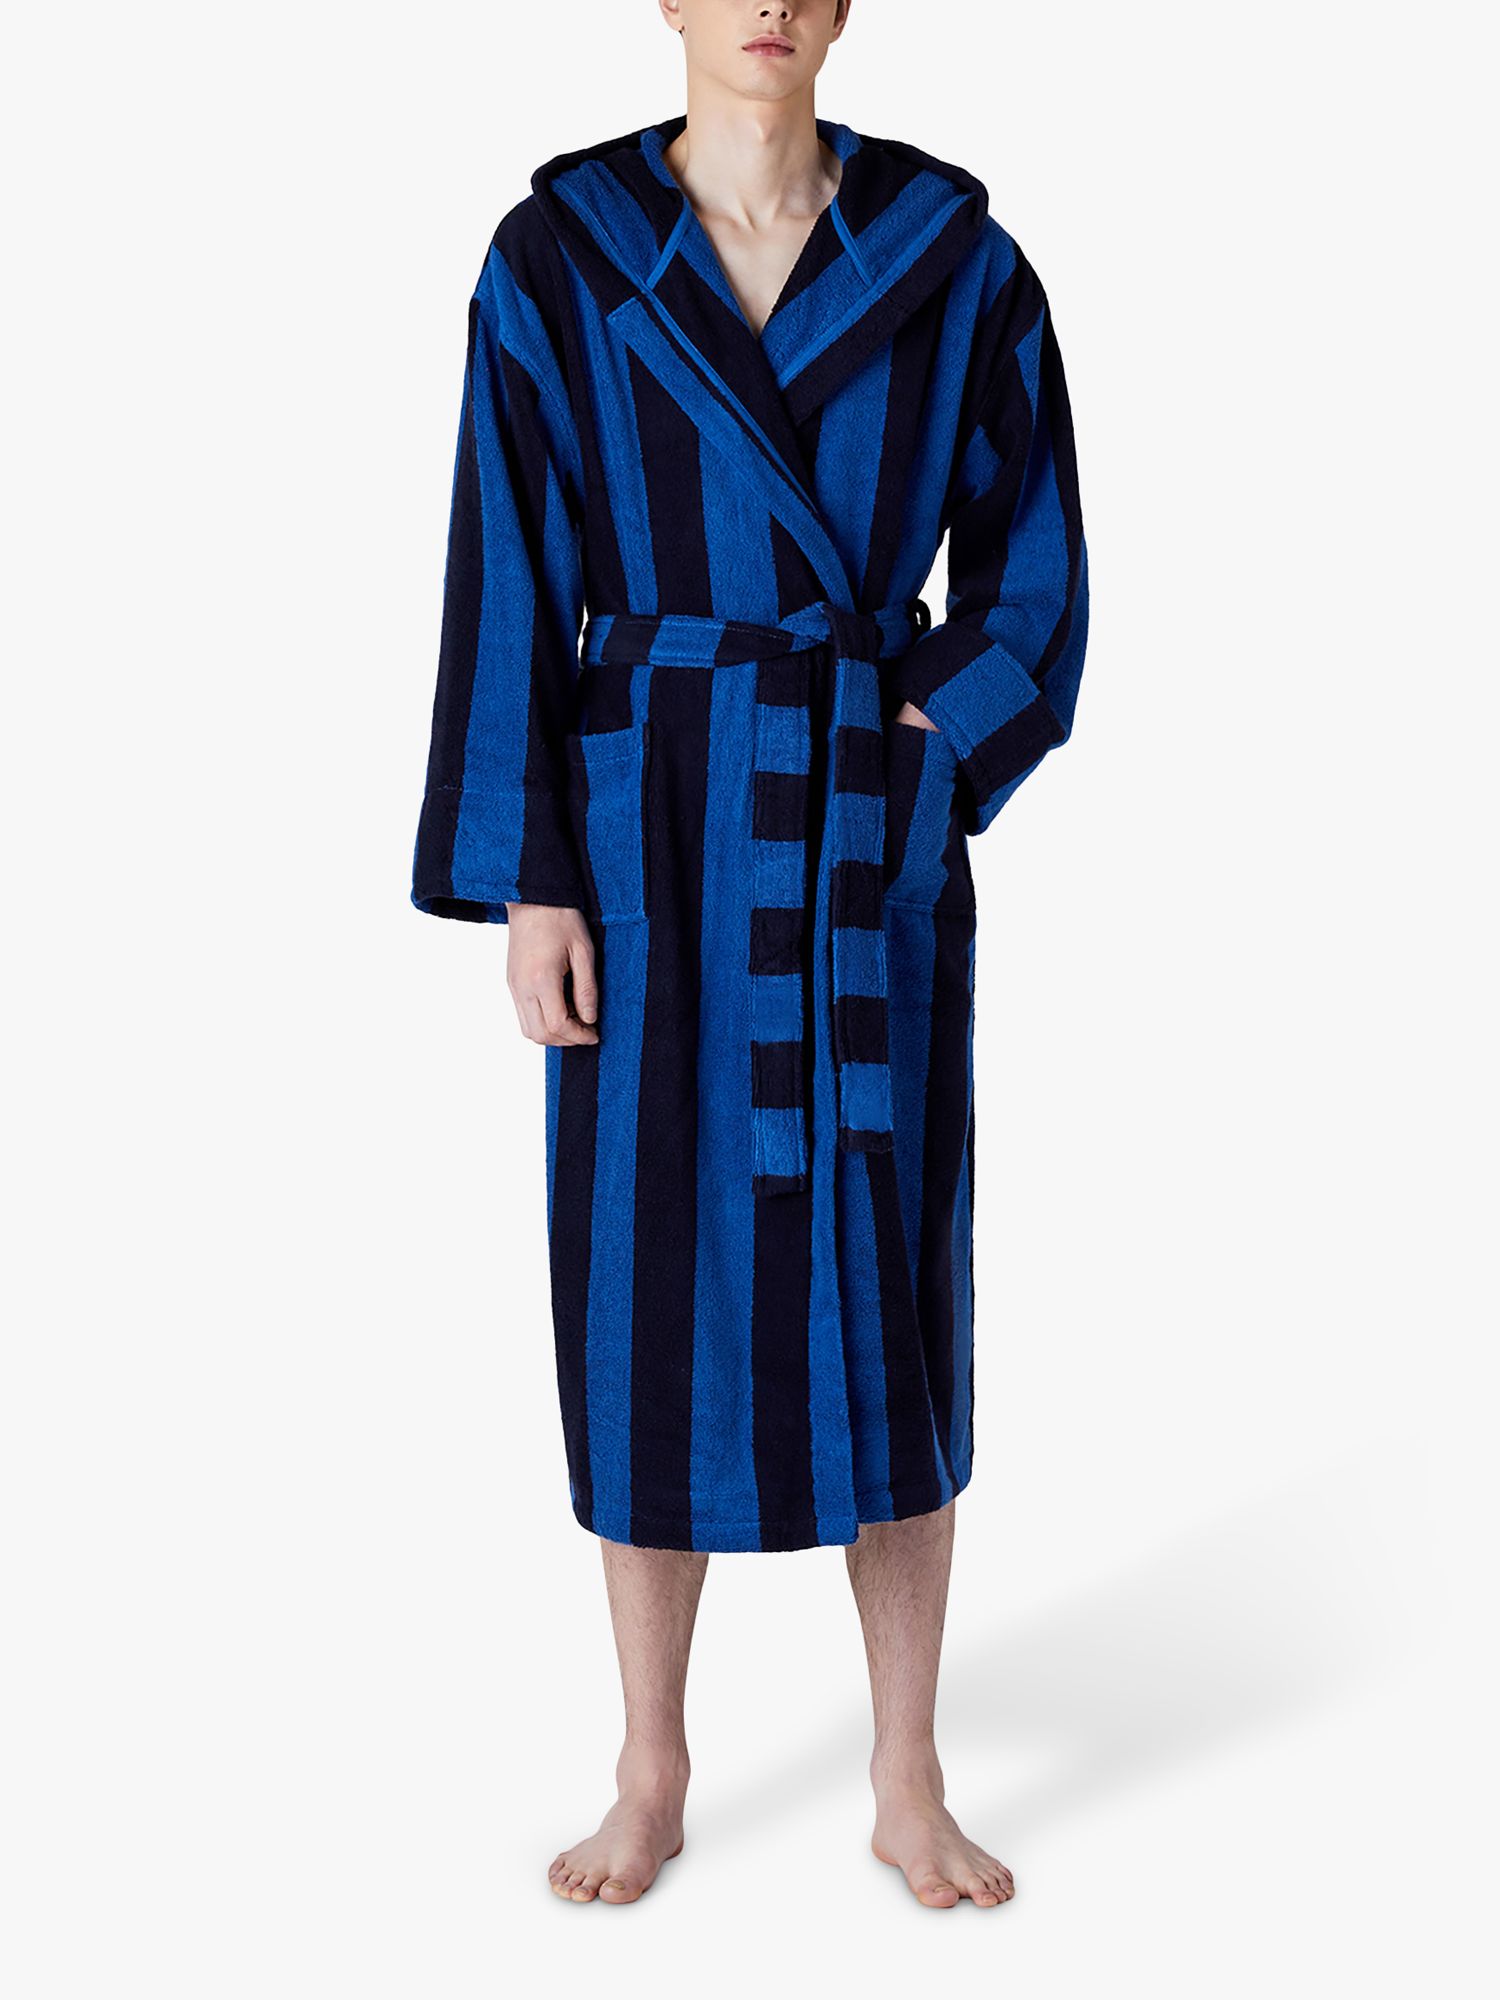 Jasper Conran London Unisex Soft Lightweight Dressing Gown, Navy/True Blue, XS